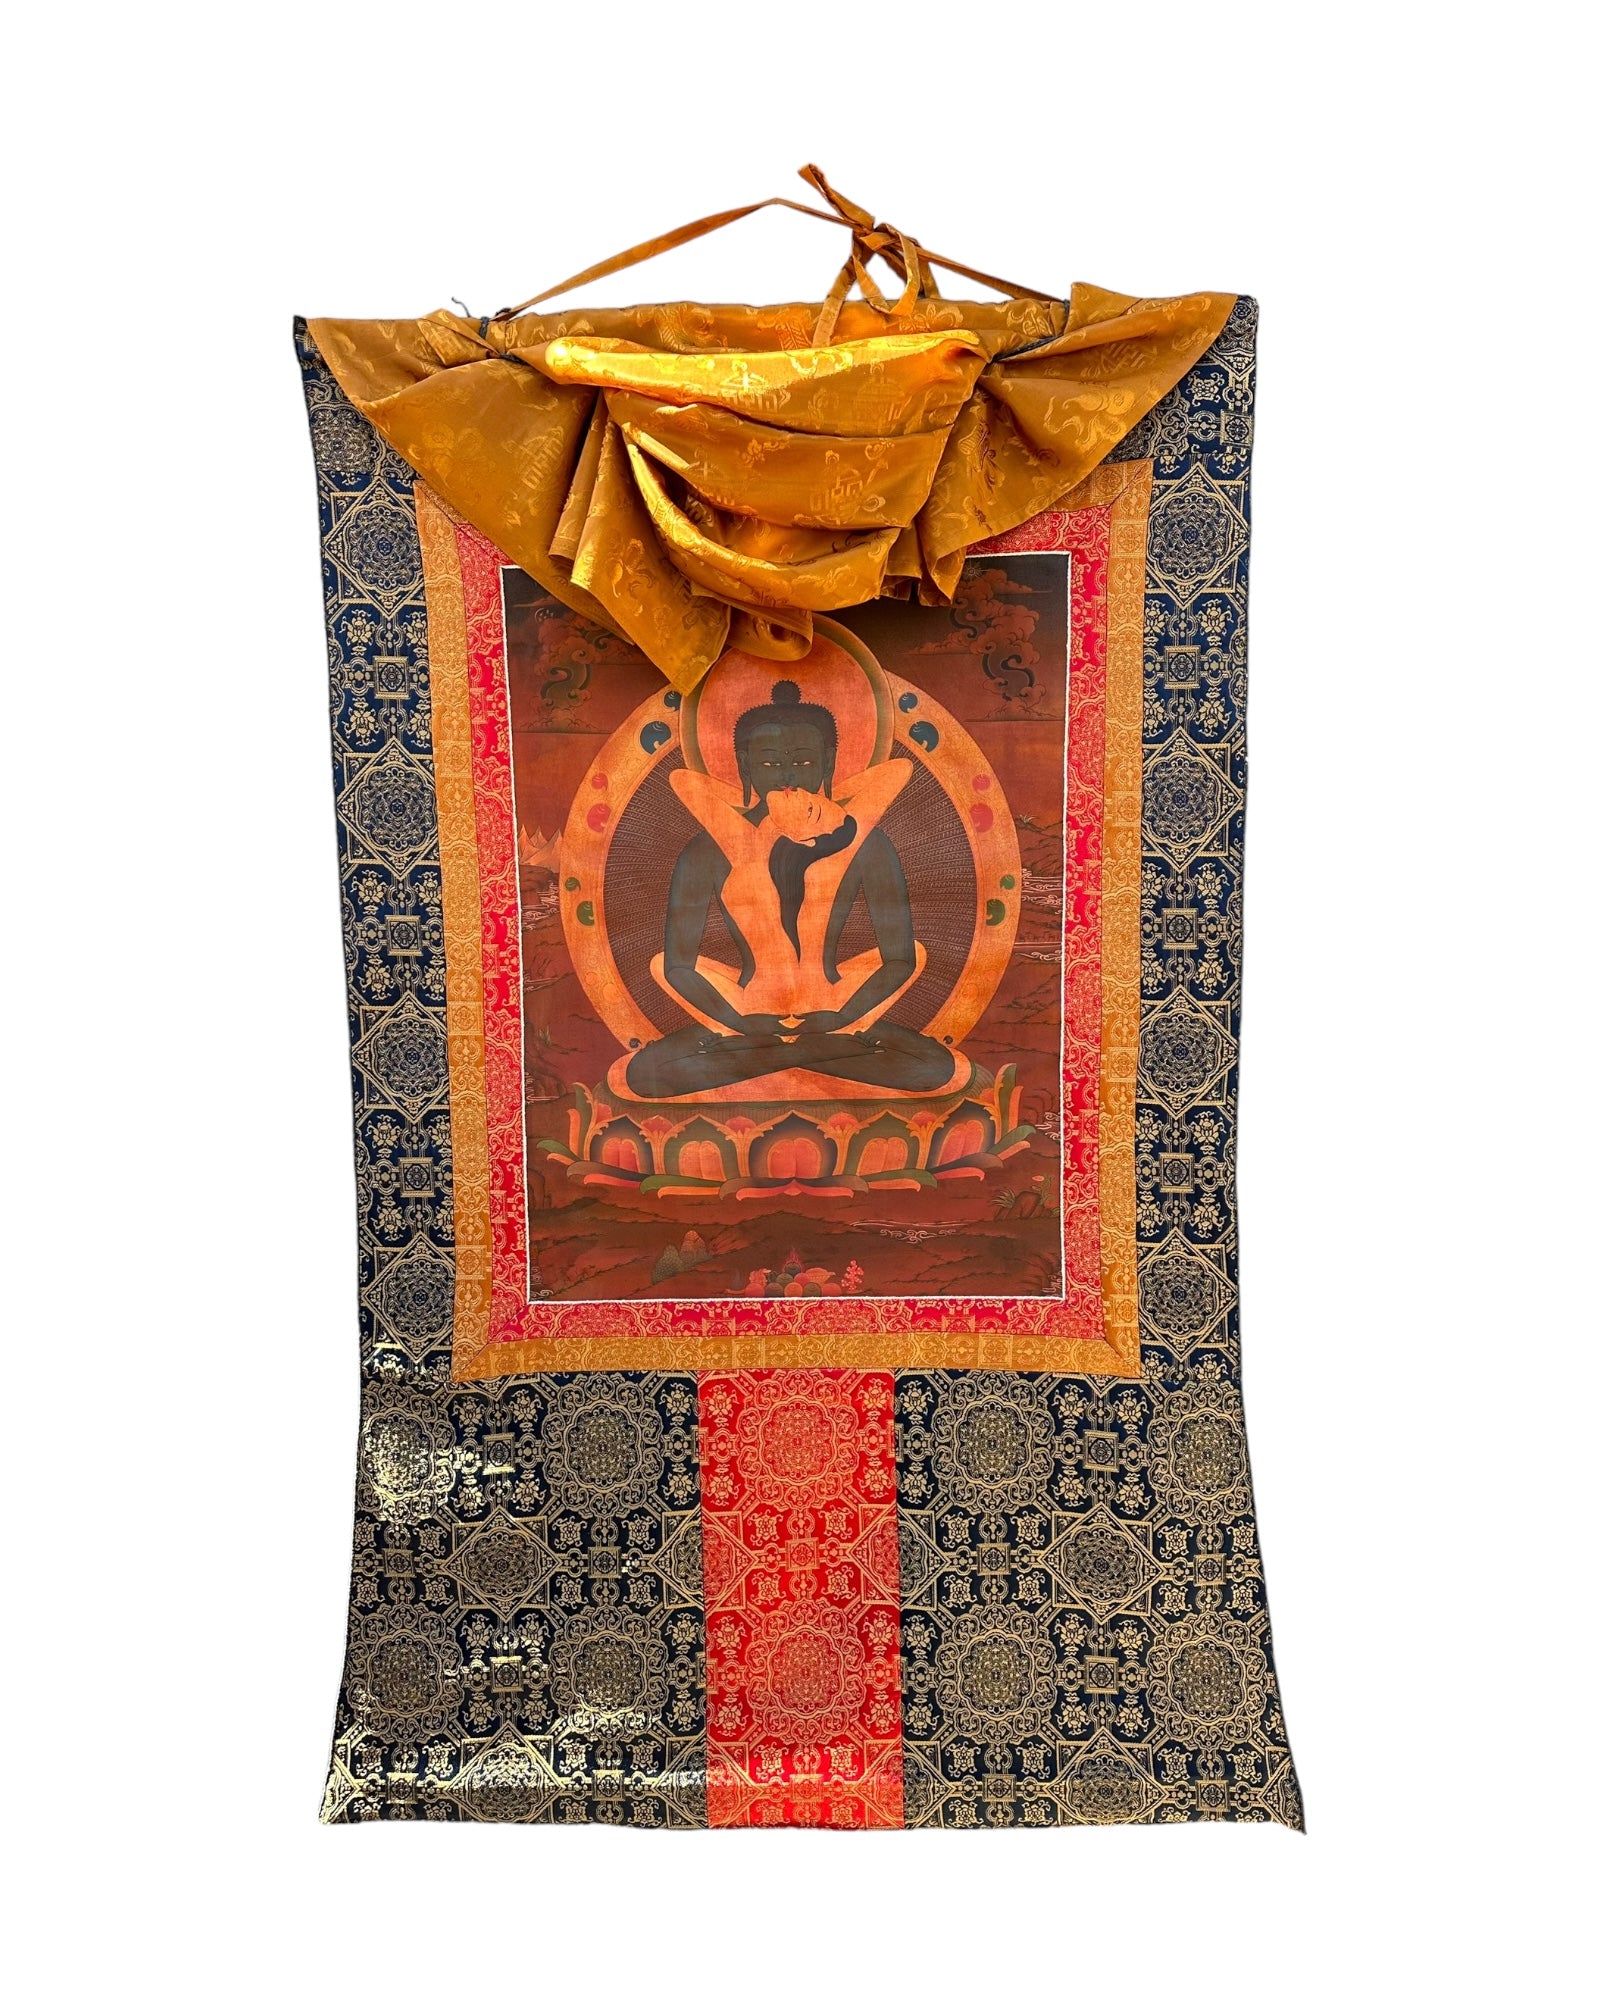 Samantabadra with Consort Handpainted silk thangka